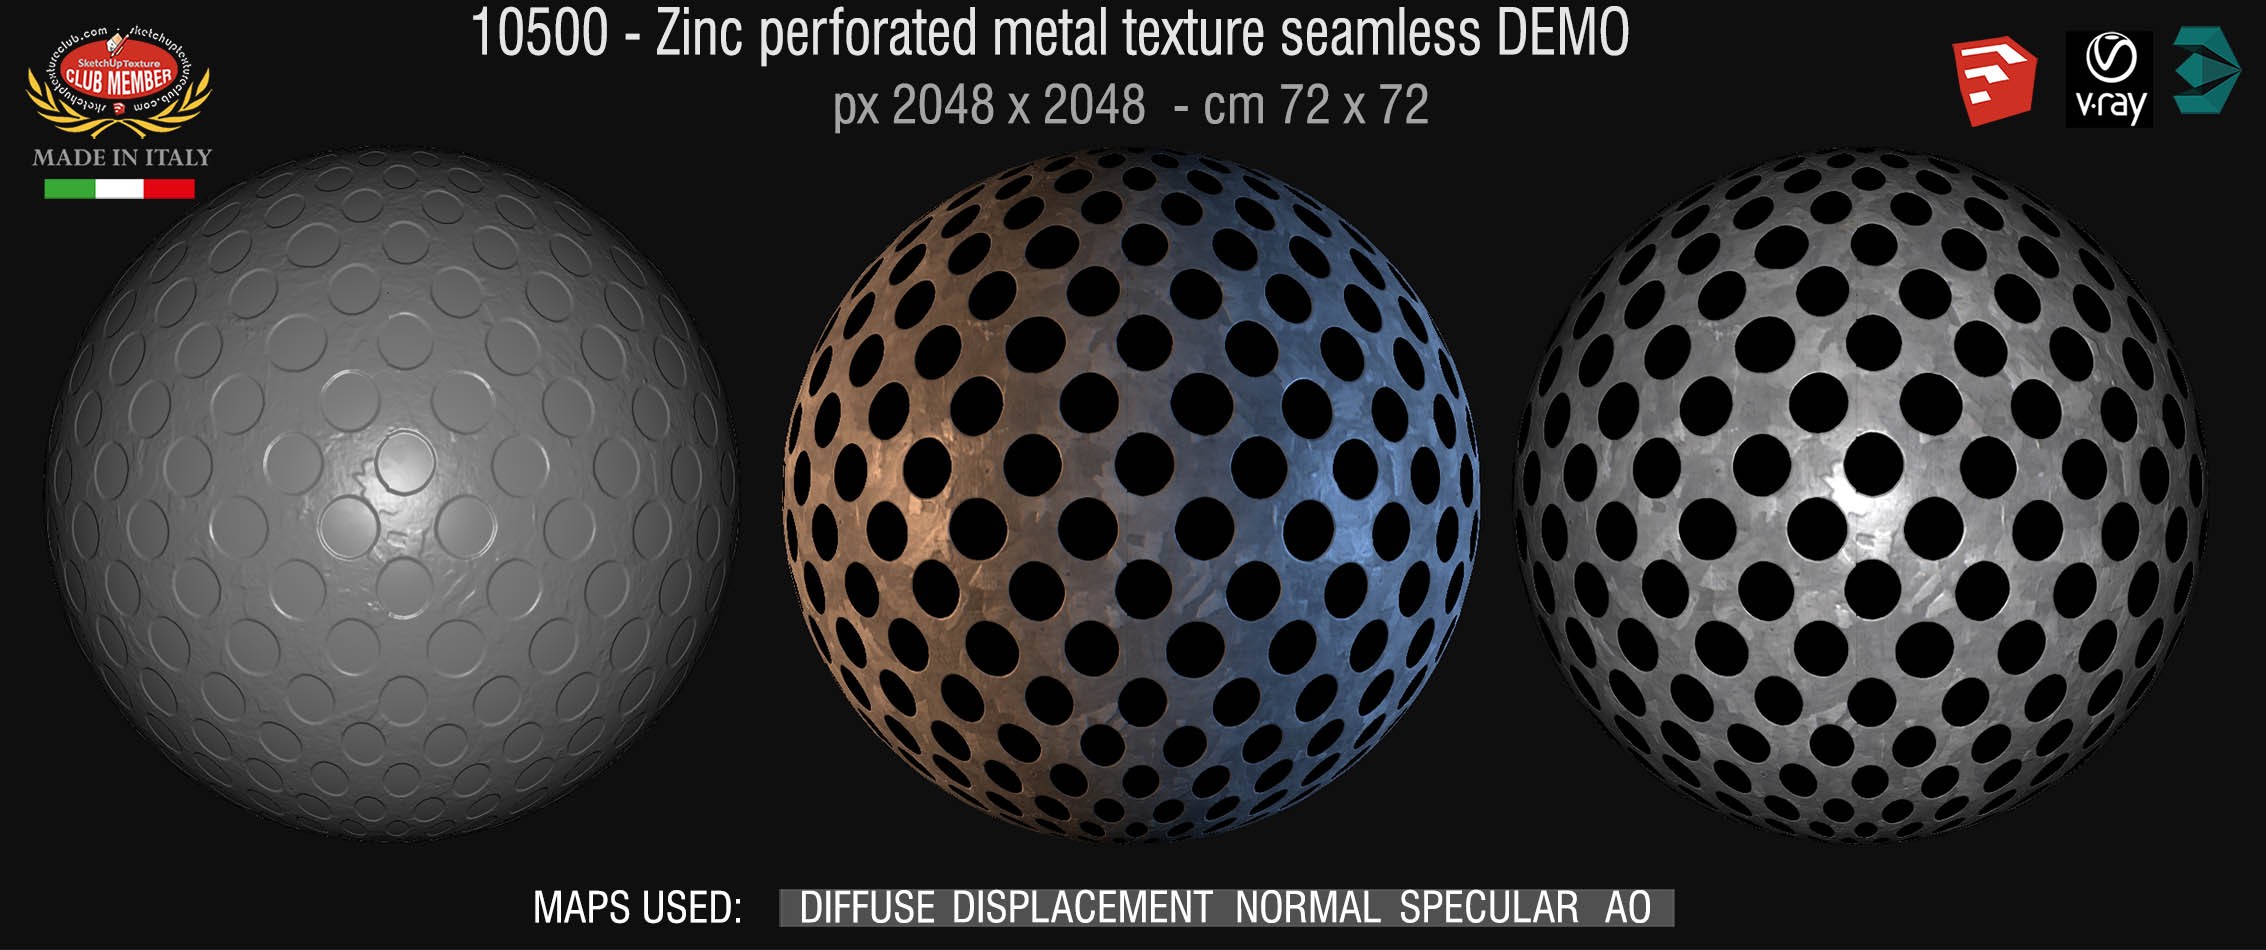 10500 HR Zinc perforated metal texture seamless + maps DEMO